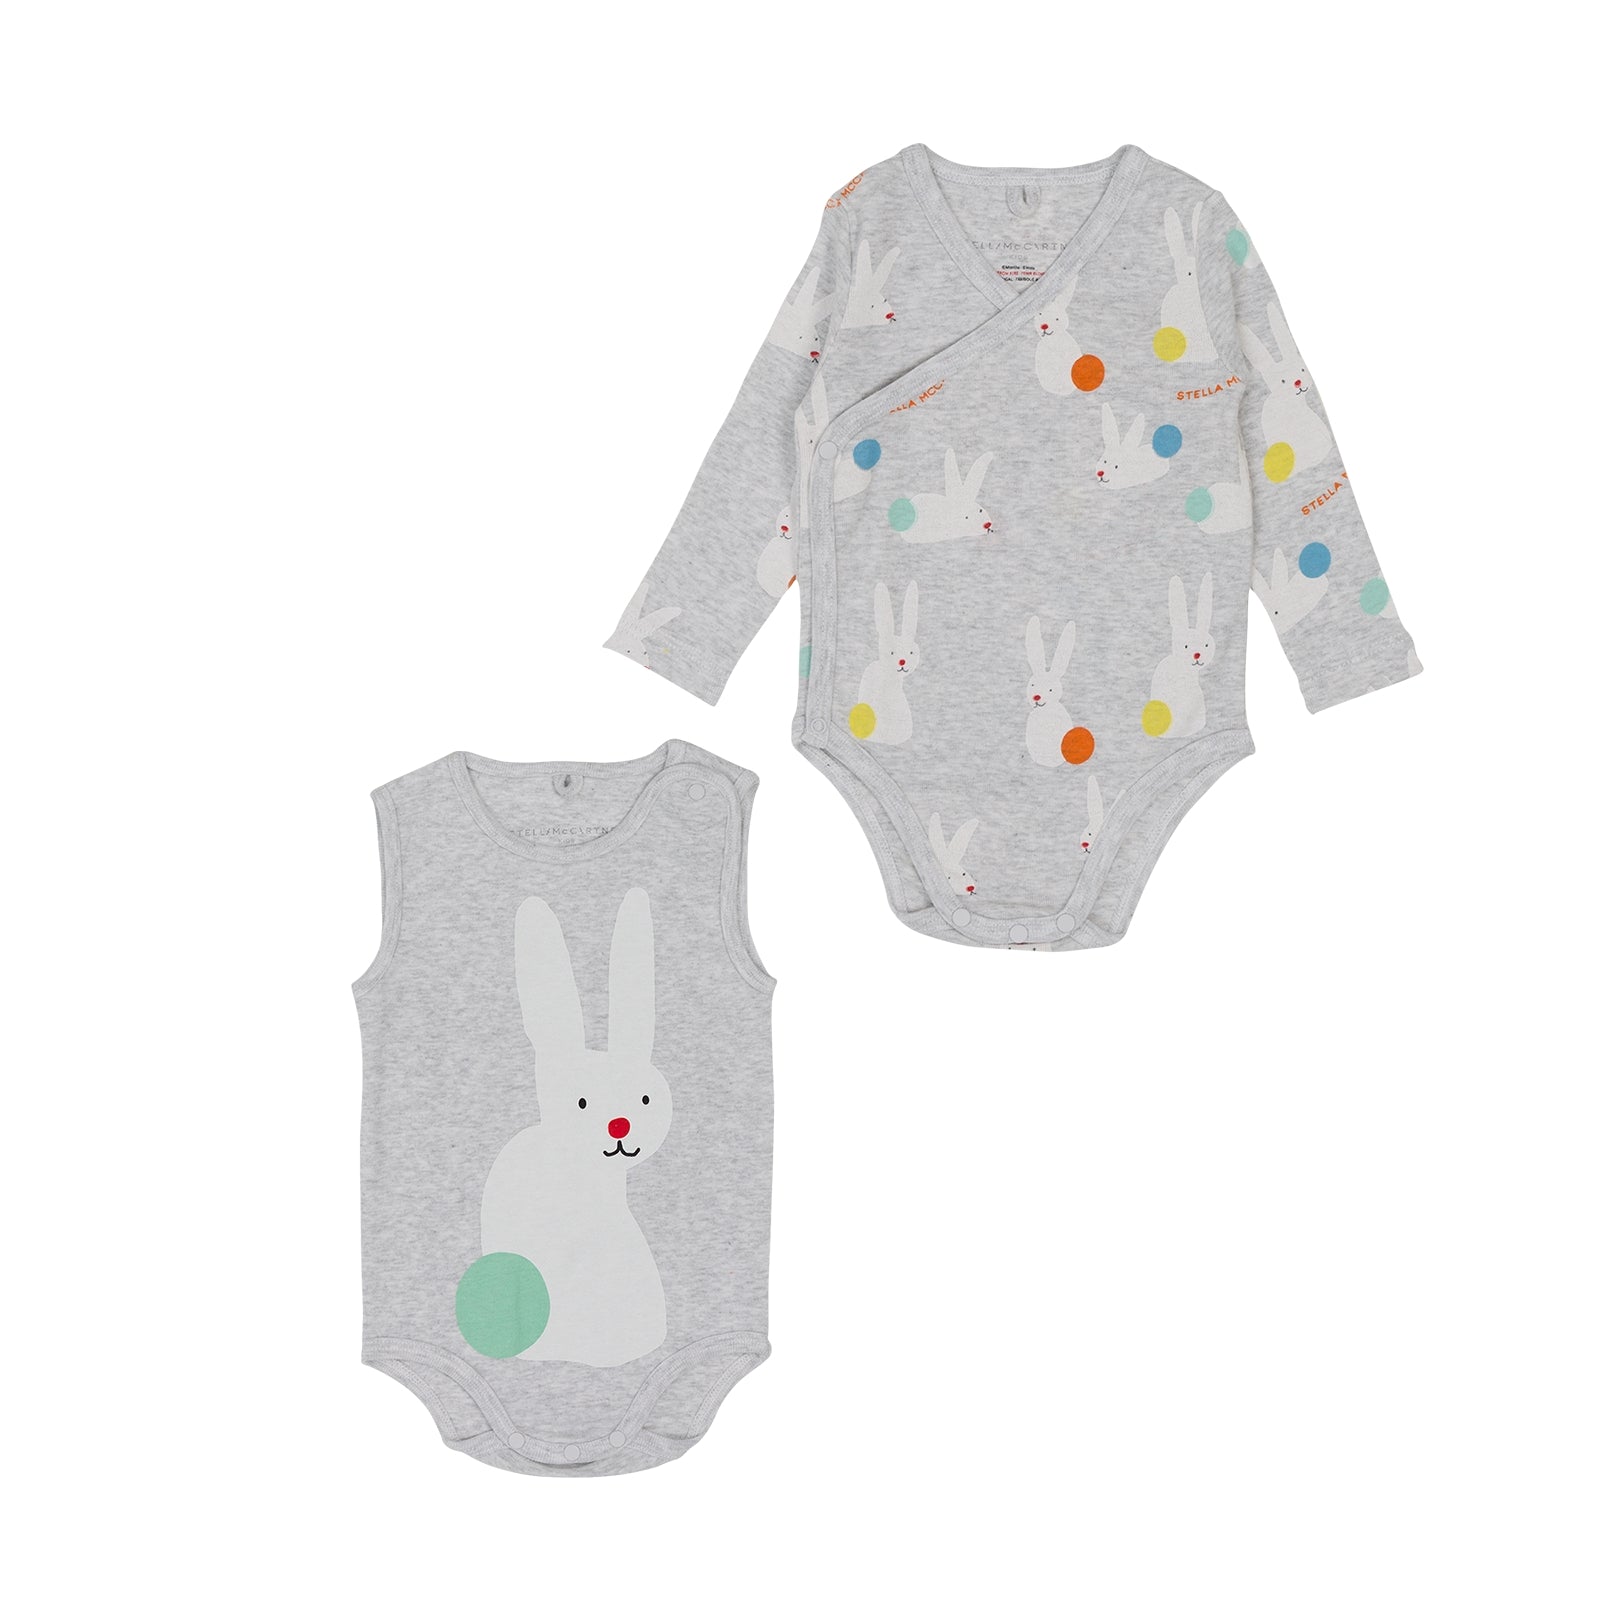 Baby Boys Grey Cotton Babysuit Set